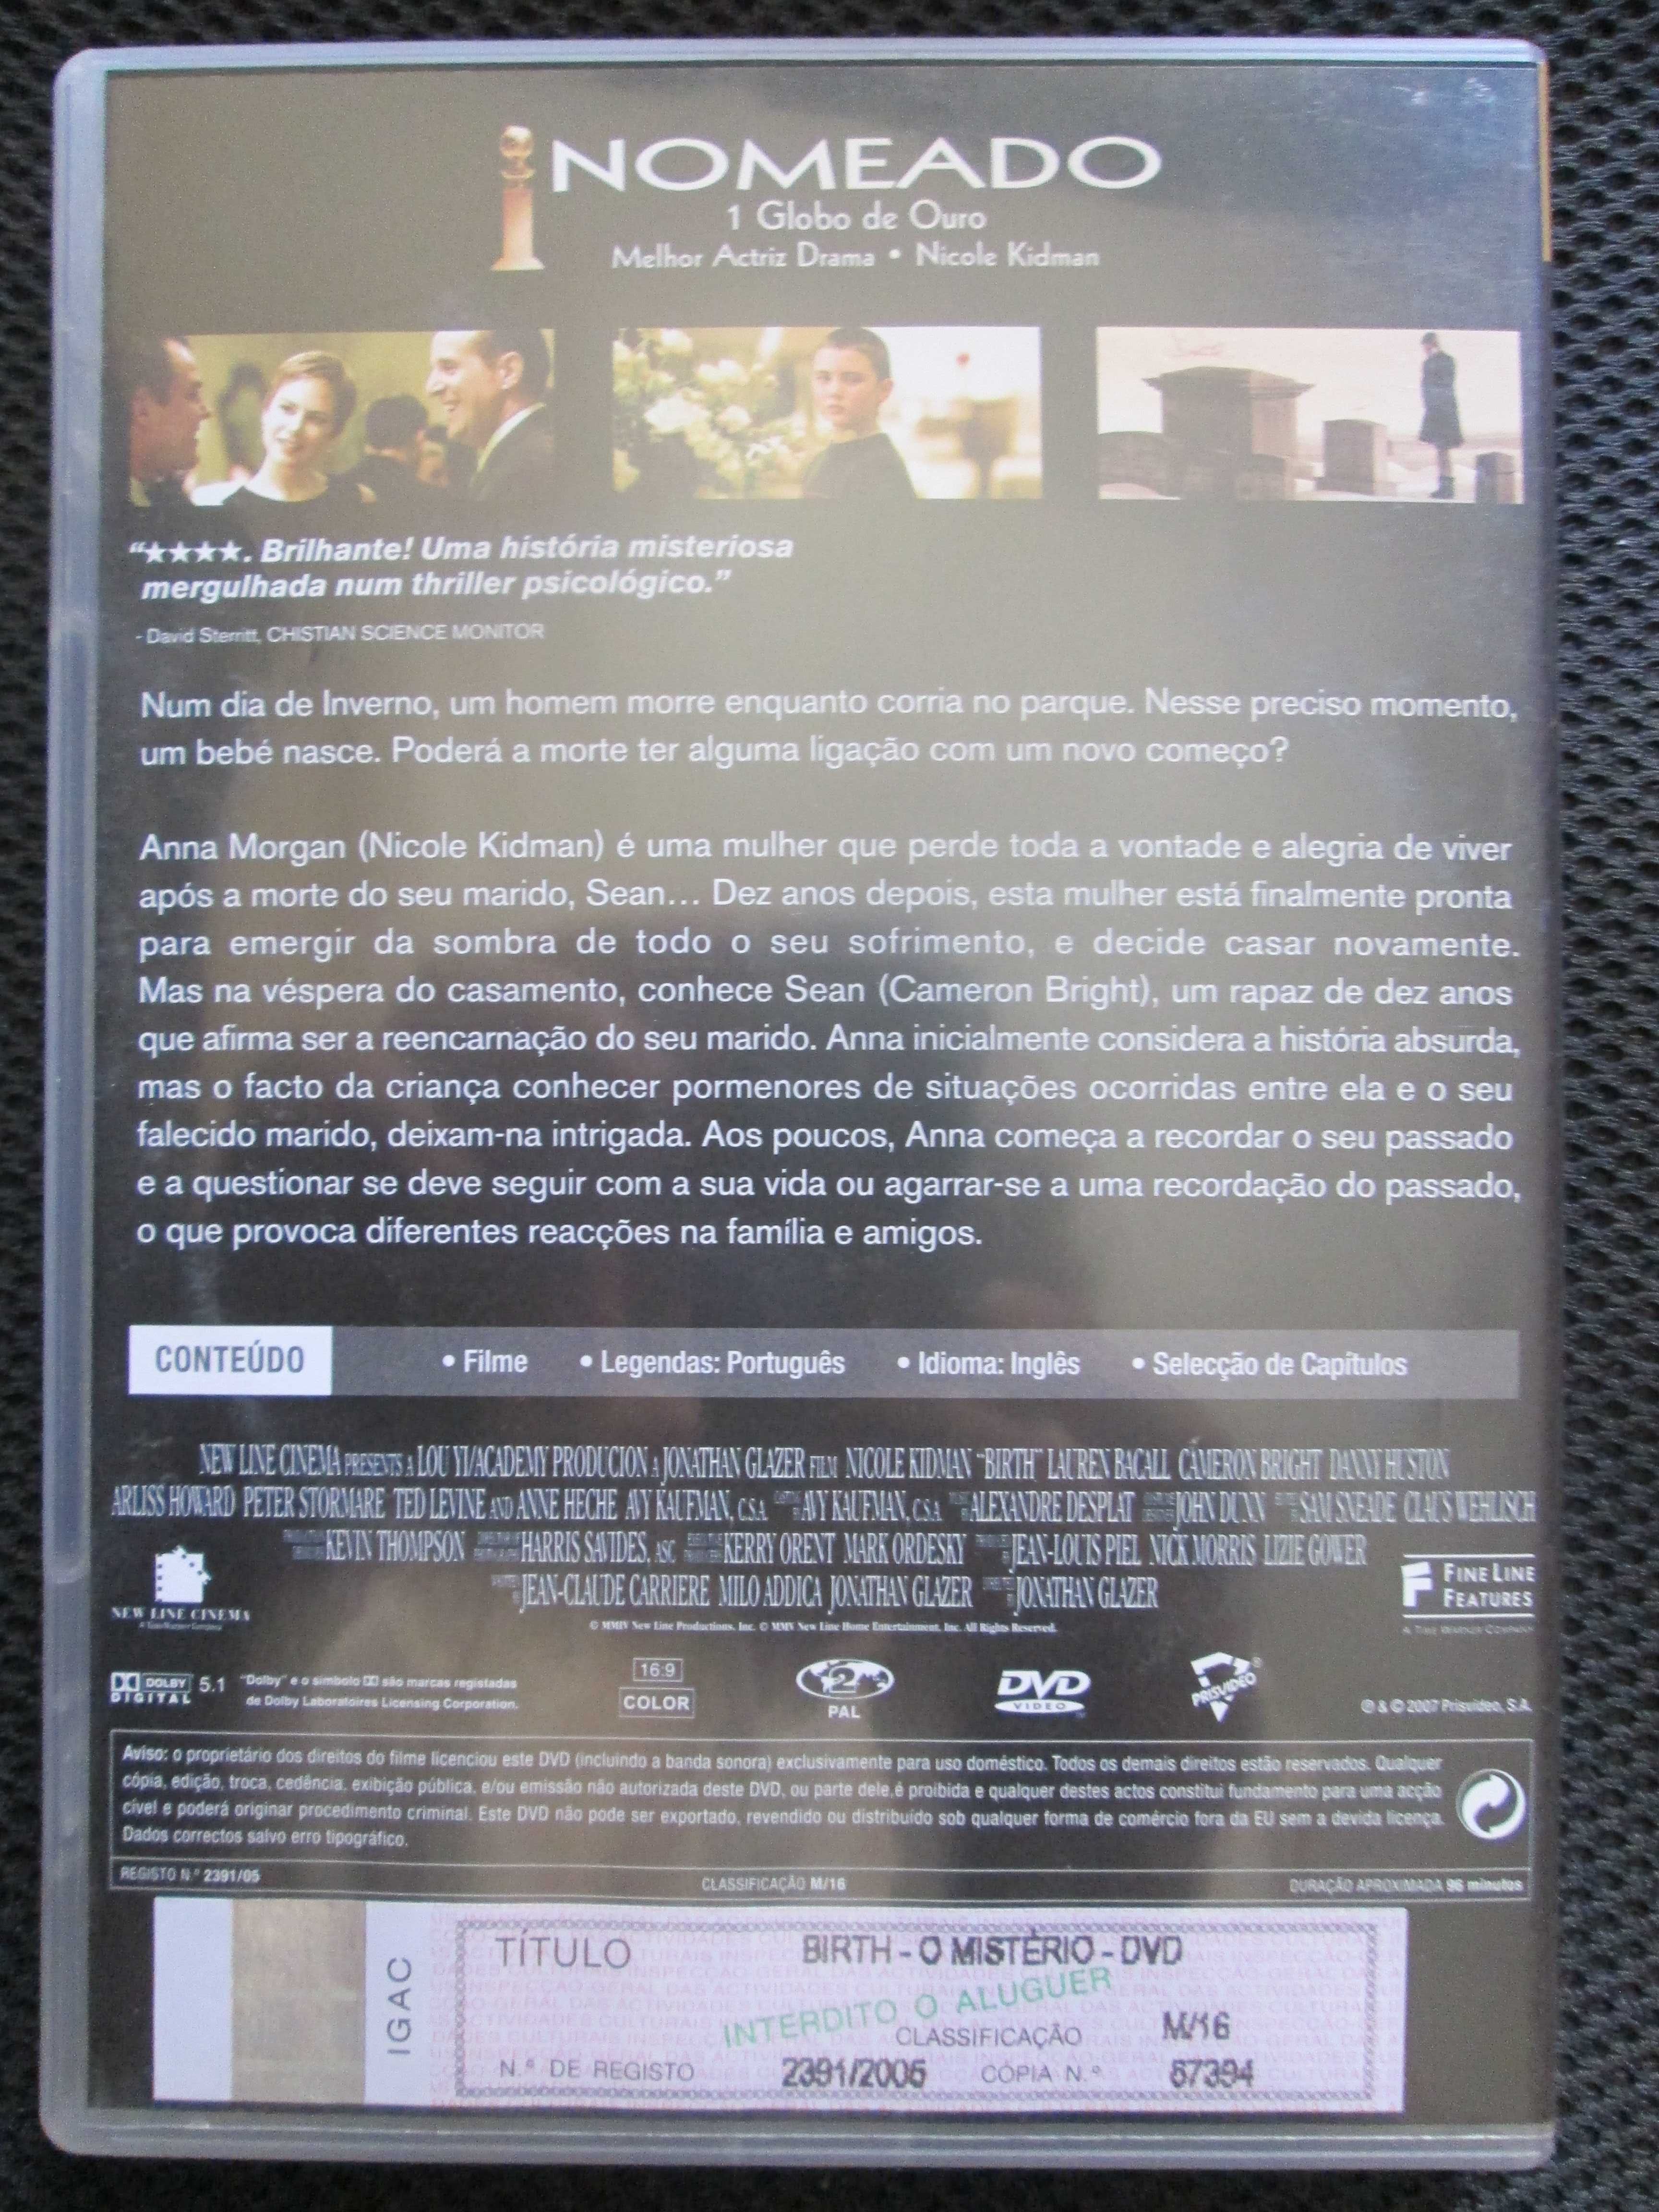 DVD - Birth - O Mistério, com Lauren Bacall , Nicole Kidman, novo